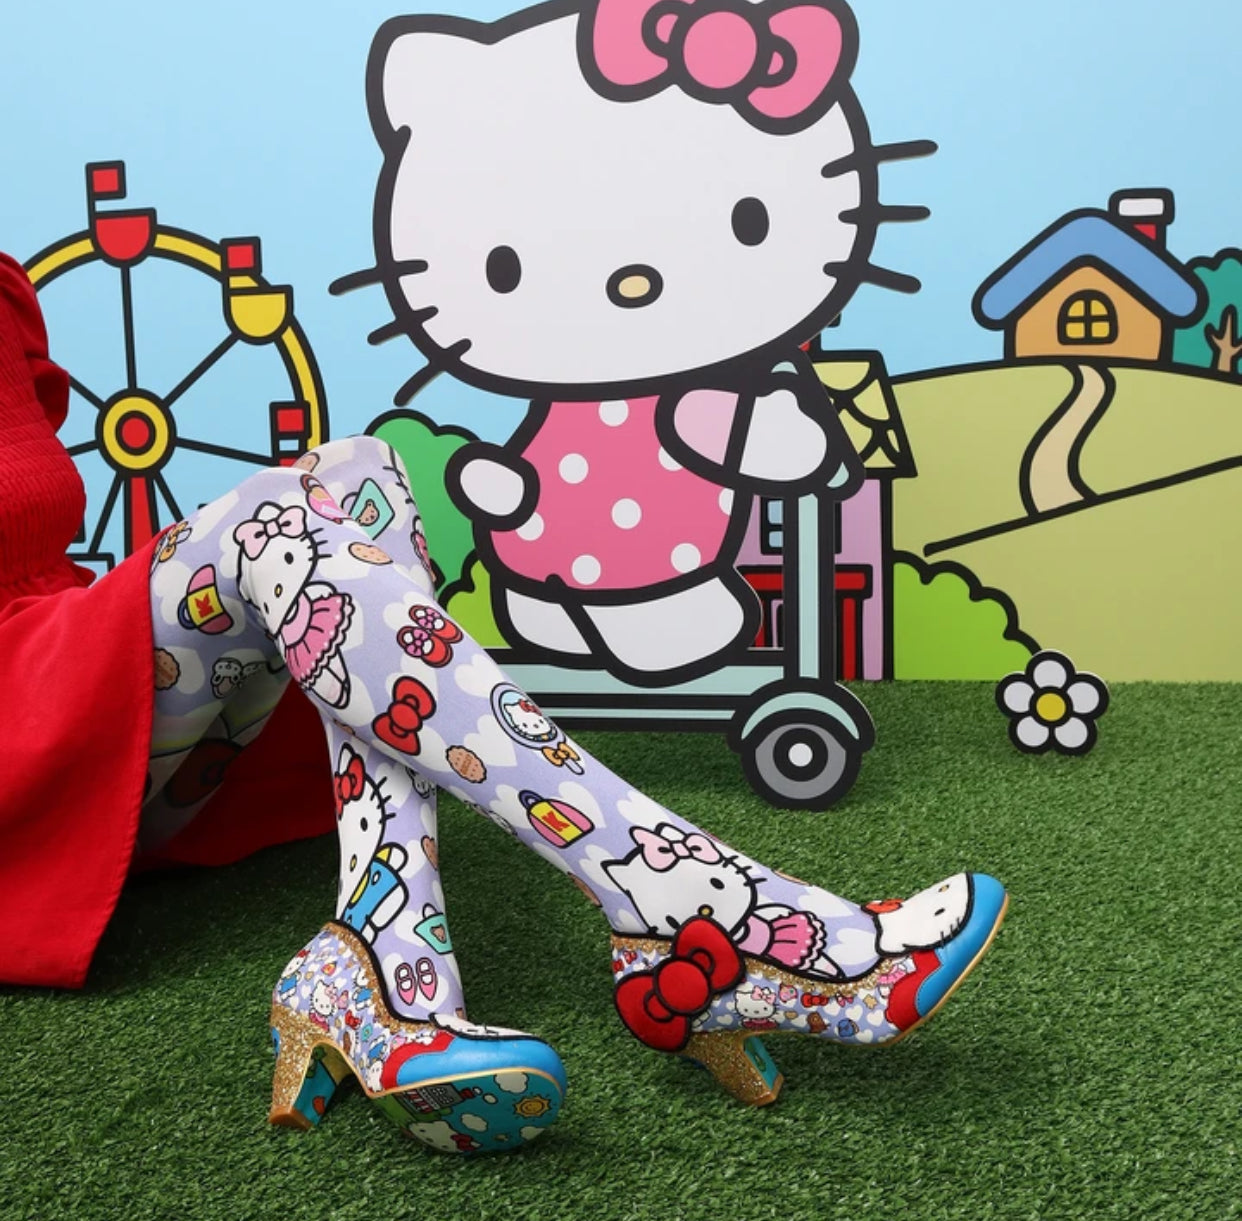 Hello Kitty Knee-Length Dresses